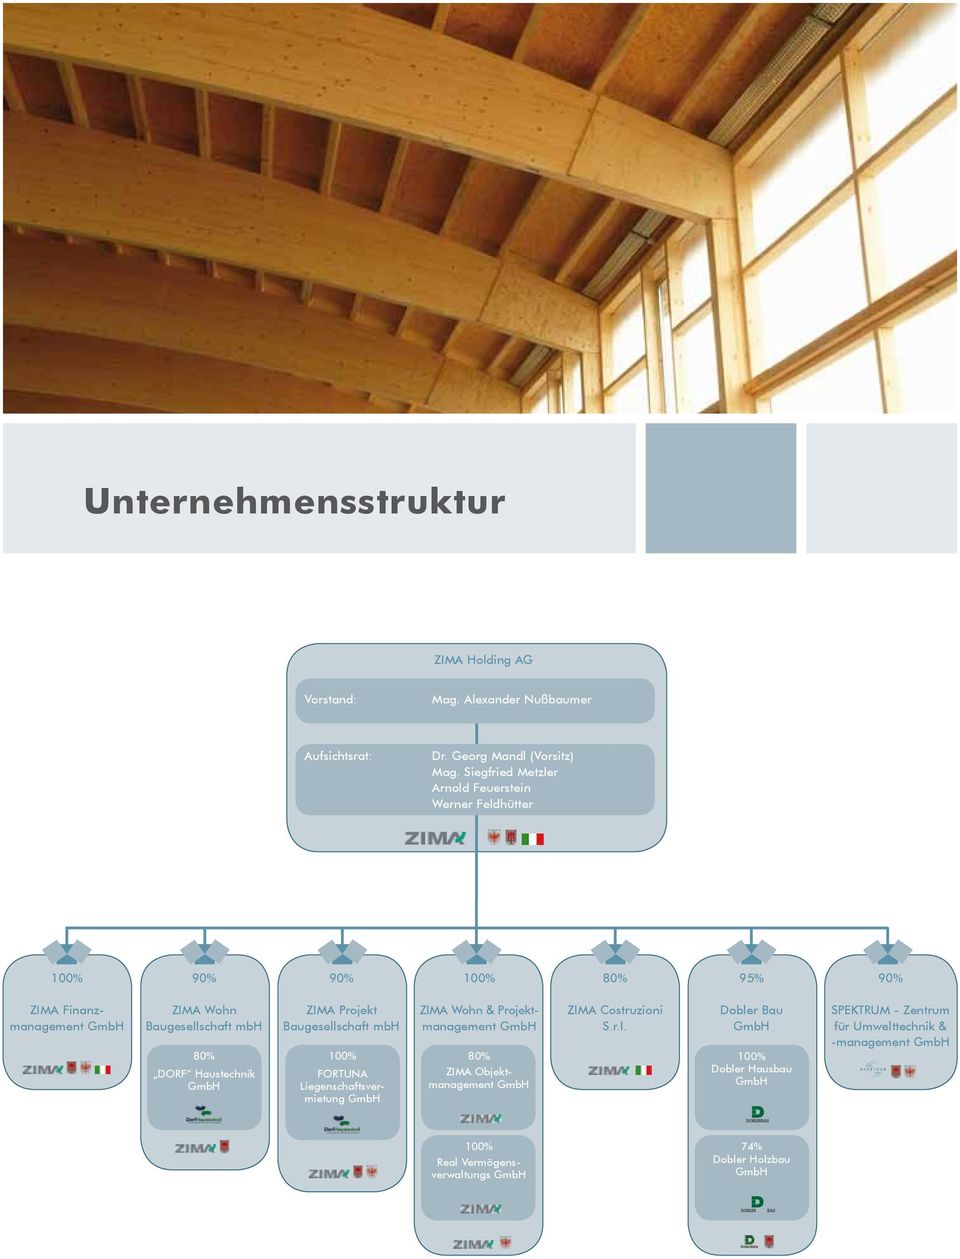 Haustechnik GmbH ZIMA Projekt Baugesellschaft mbh 100% FORTUNA Liegenschaftsvermietung GmbH ZIMA Wohn & Projektmanagement GmbH 80% ZIMA